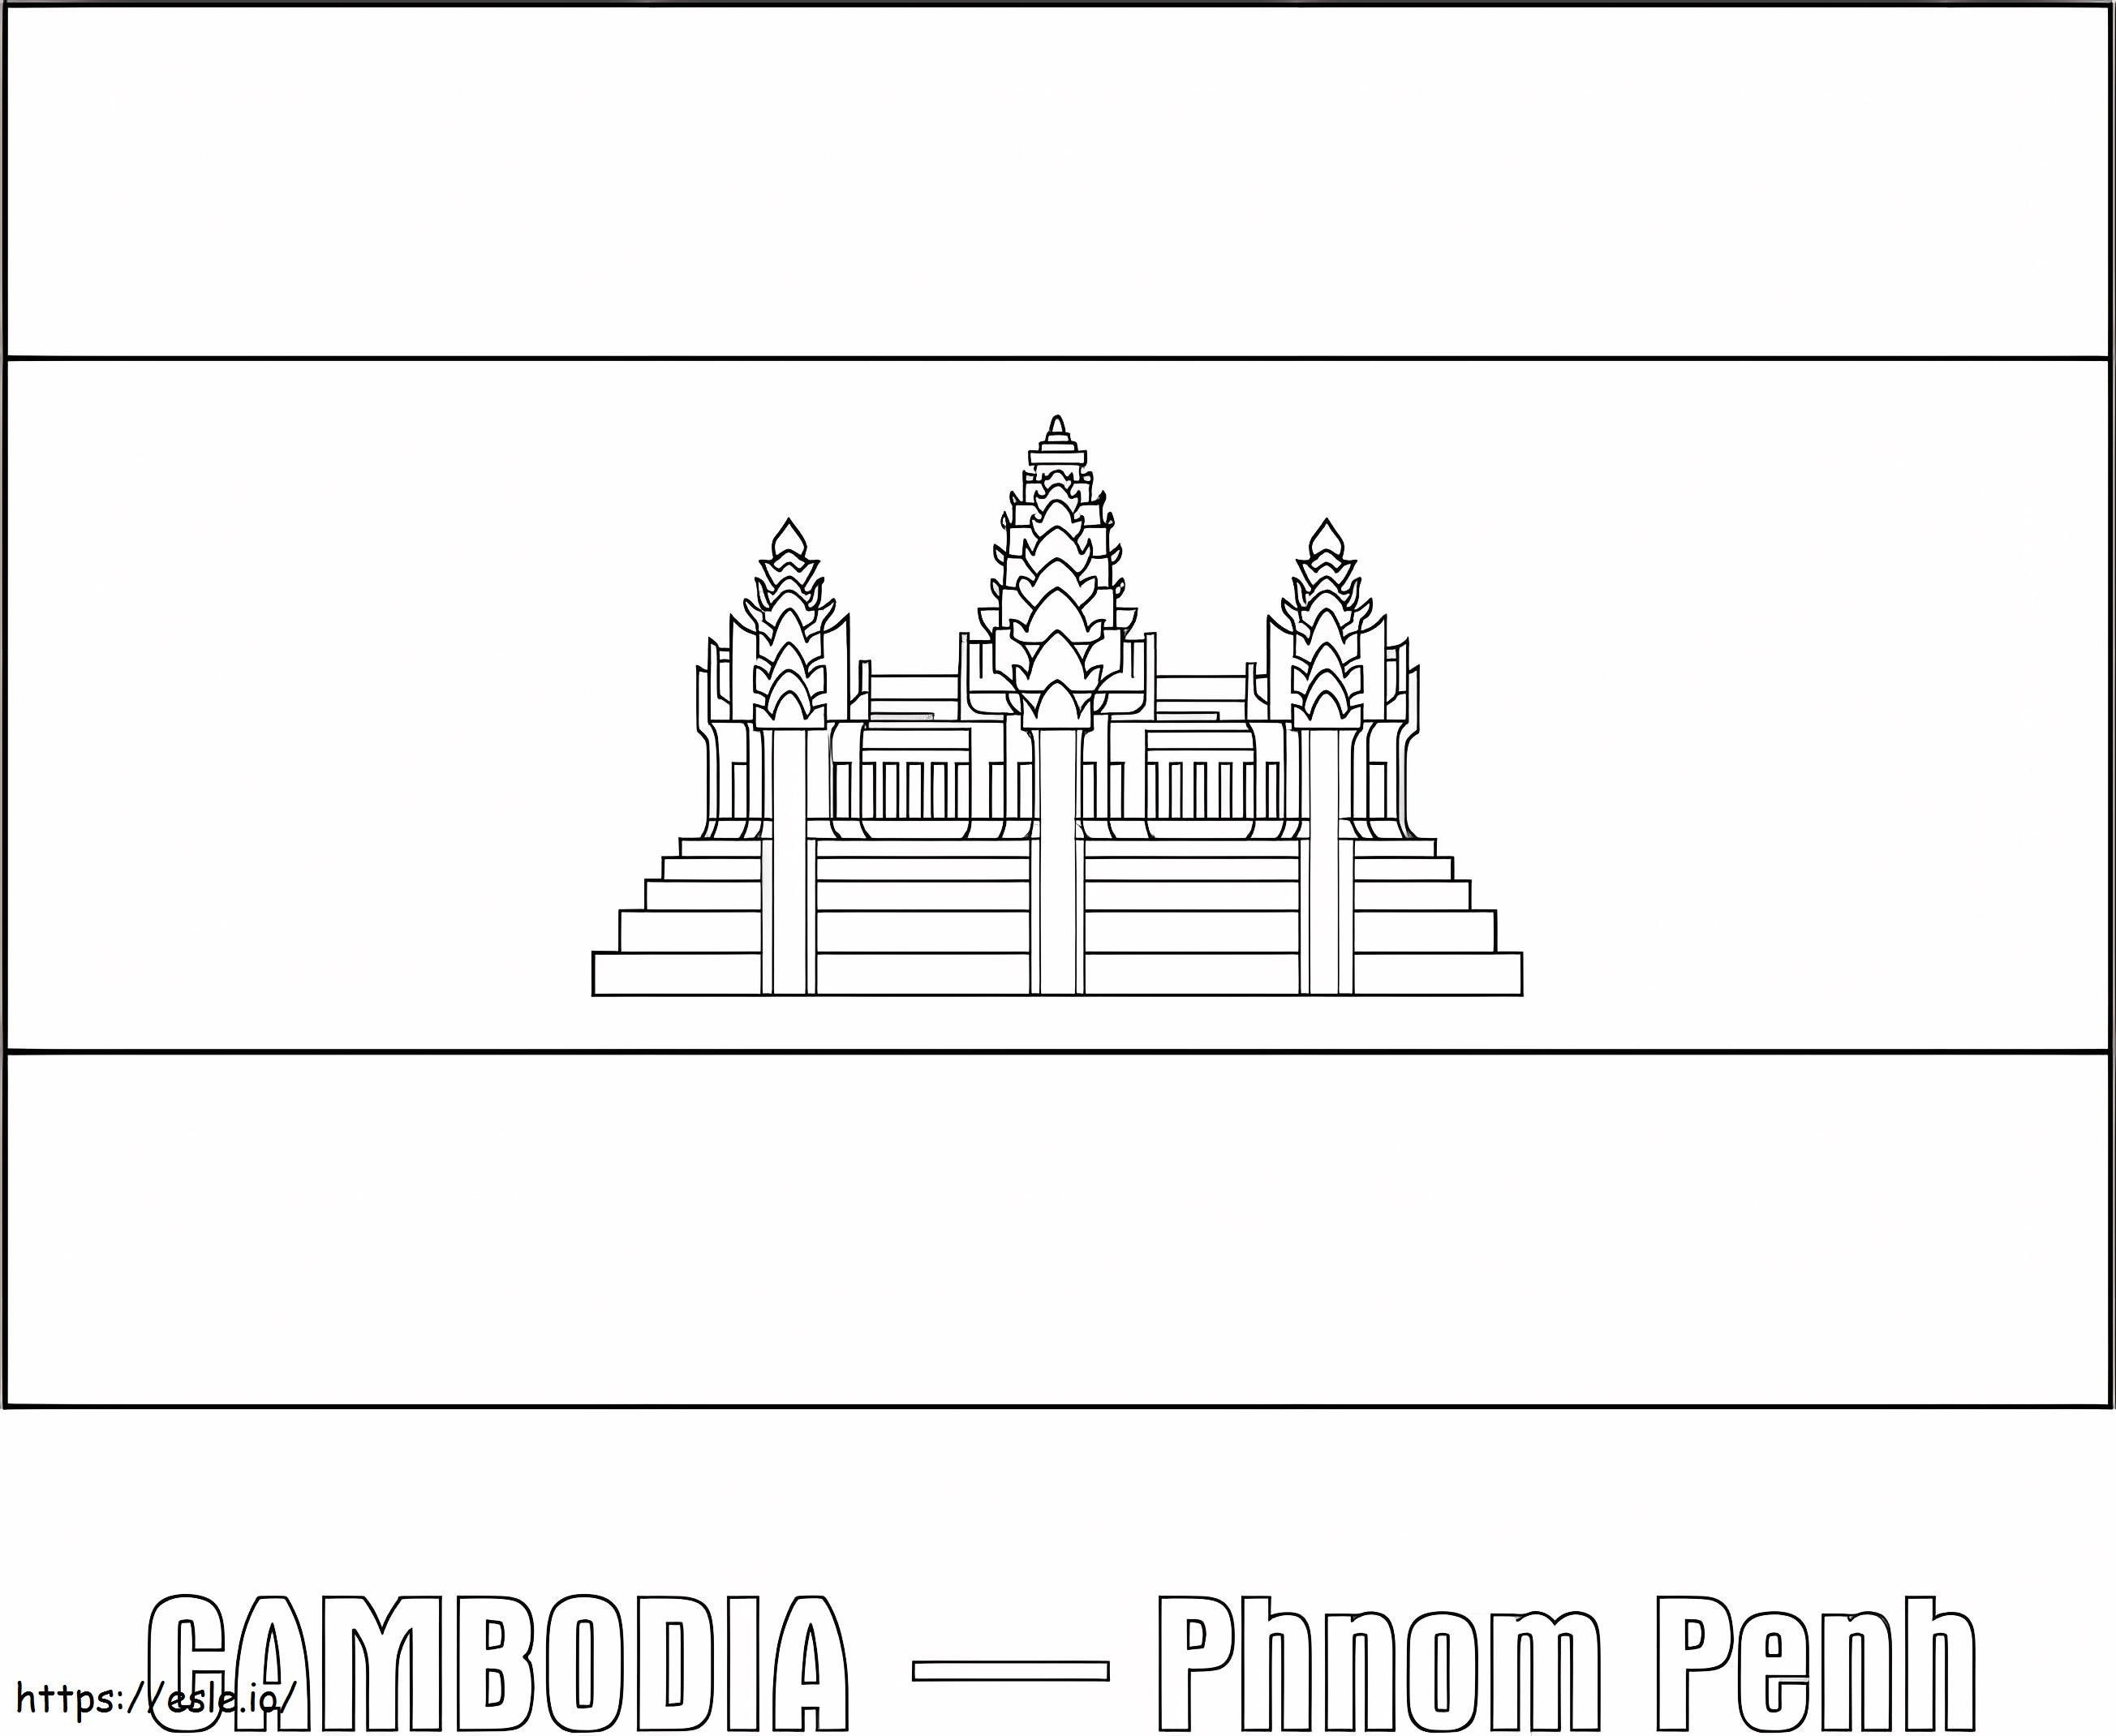 Camboya para imprimir gratis para colorear